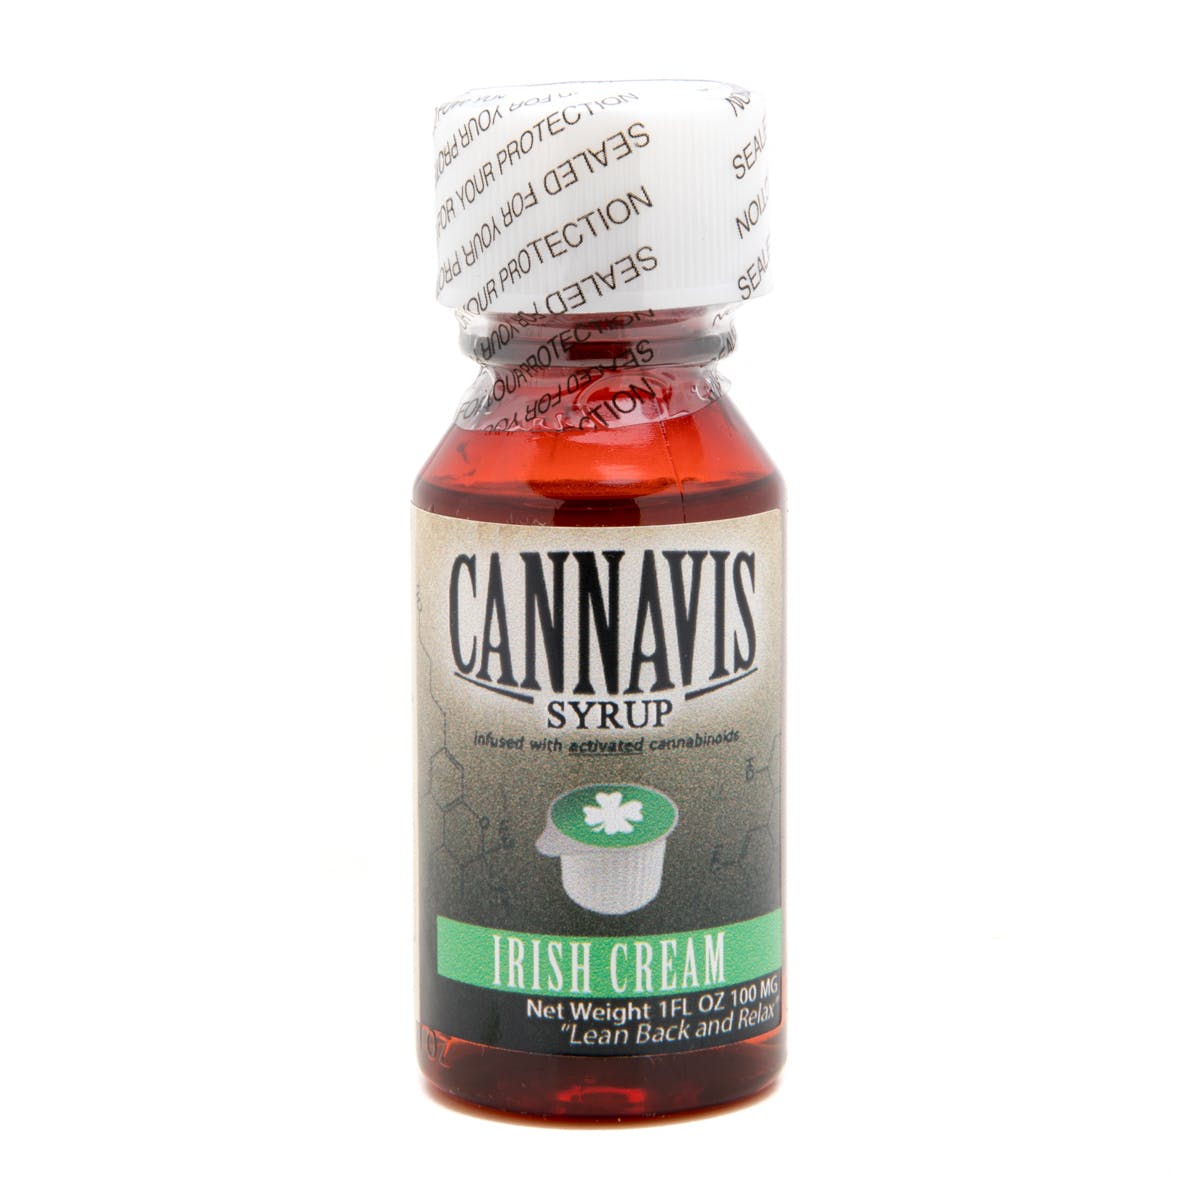 marijuana-dispensaries-supa-nova-canoga-in-canoga-cannavis-syrup-2c-irish-cream-100mg